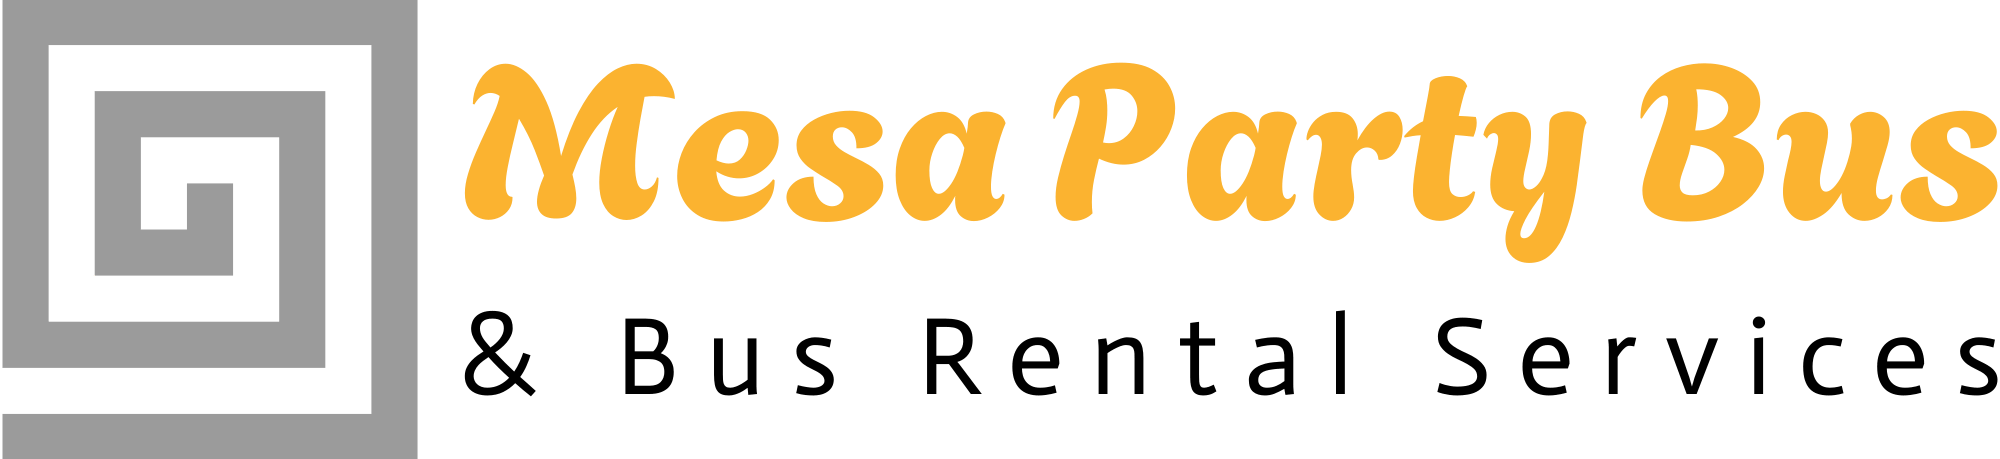 Mesa Party Bus Company logo